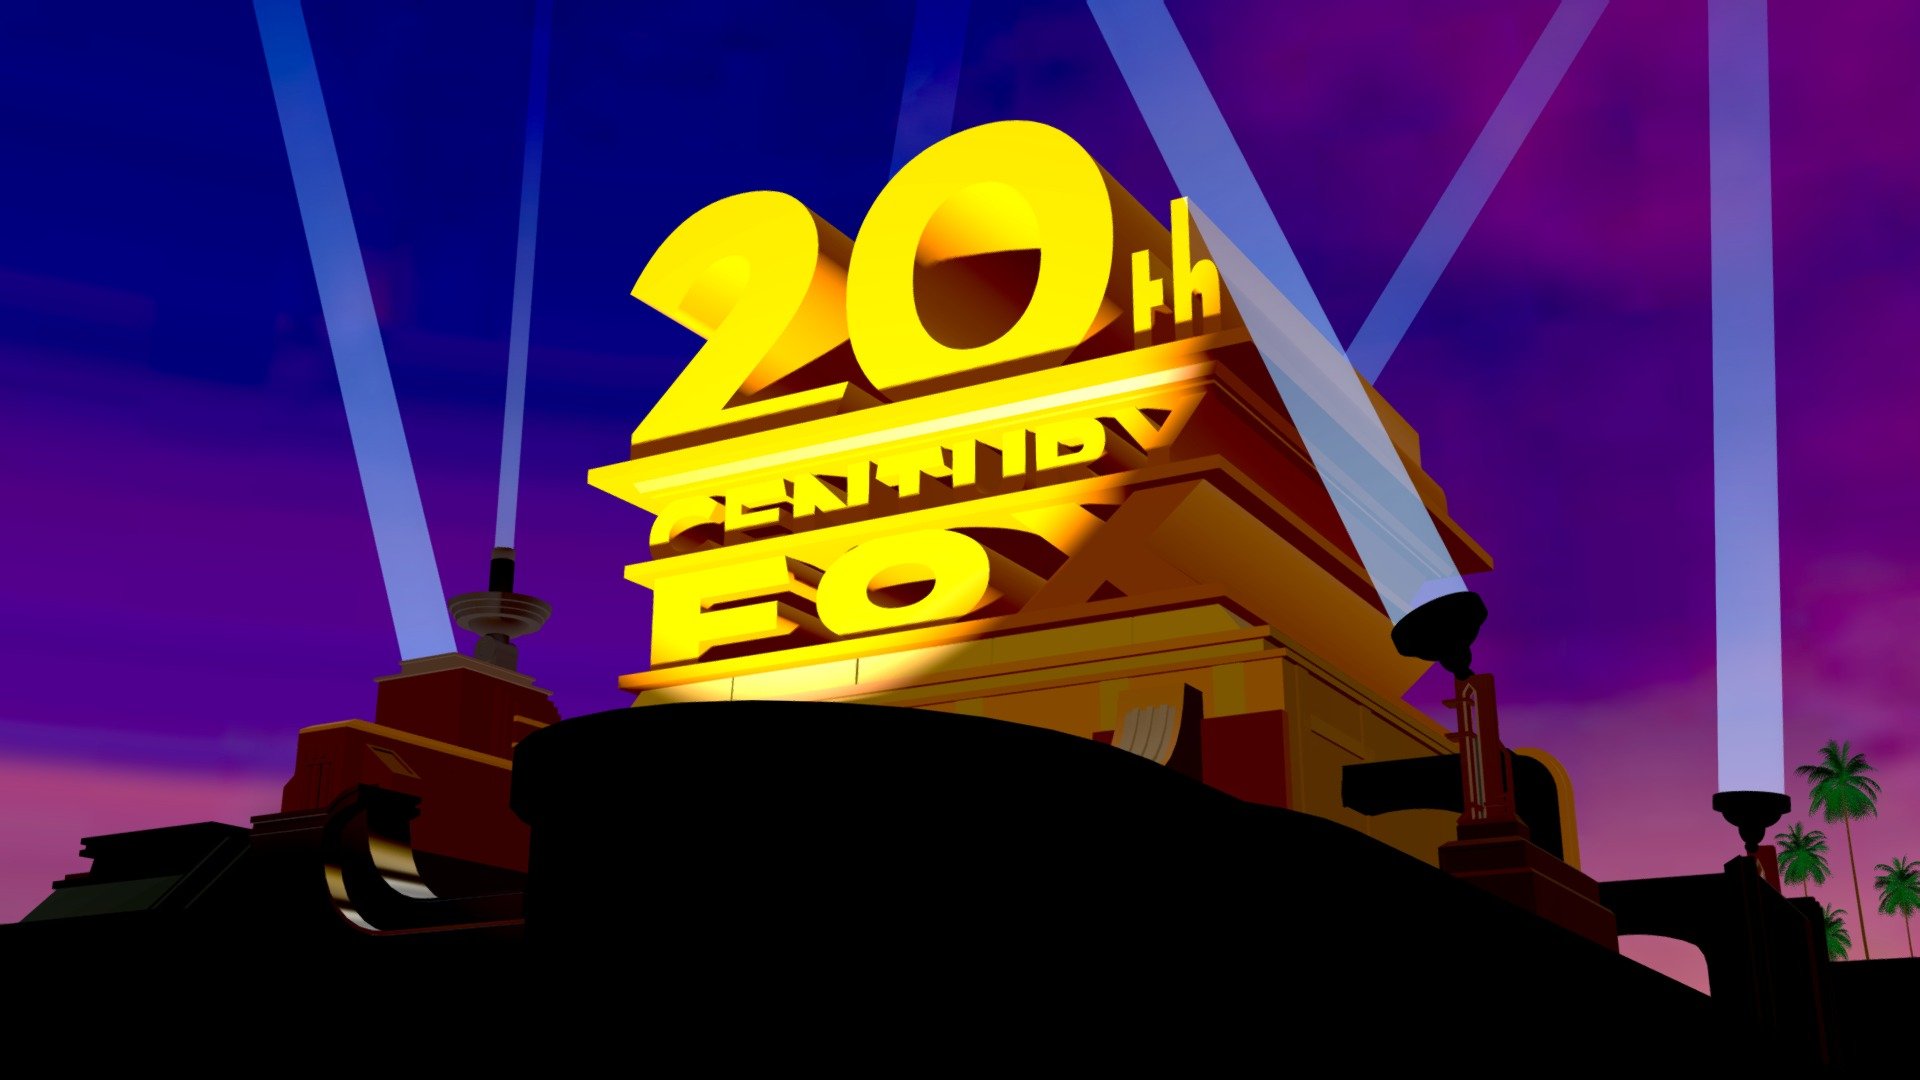 20th Century Fox (2009-, Game) Logo Remake - Download Free 3D ...